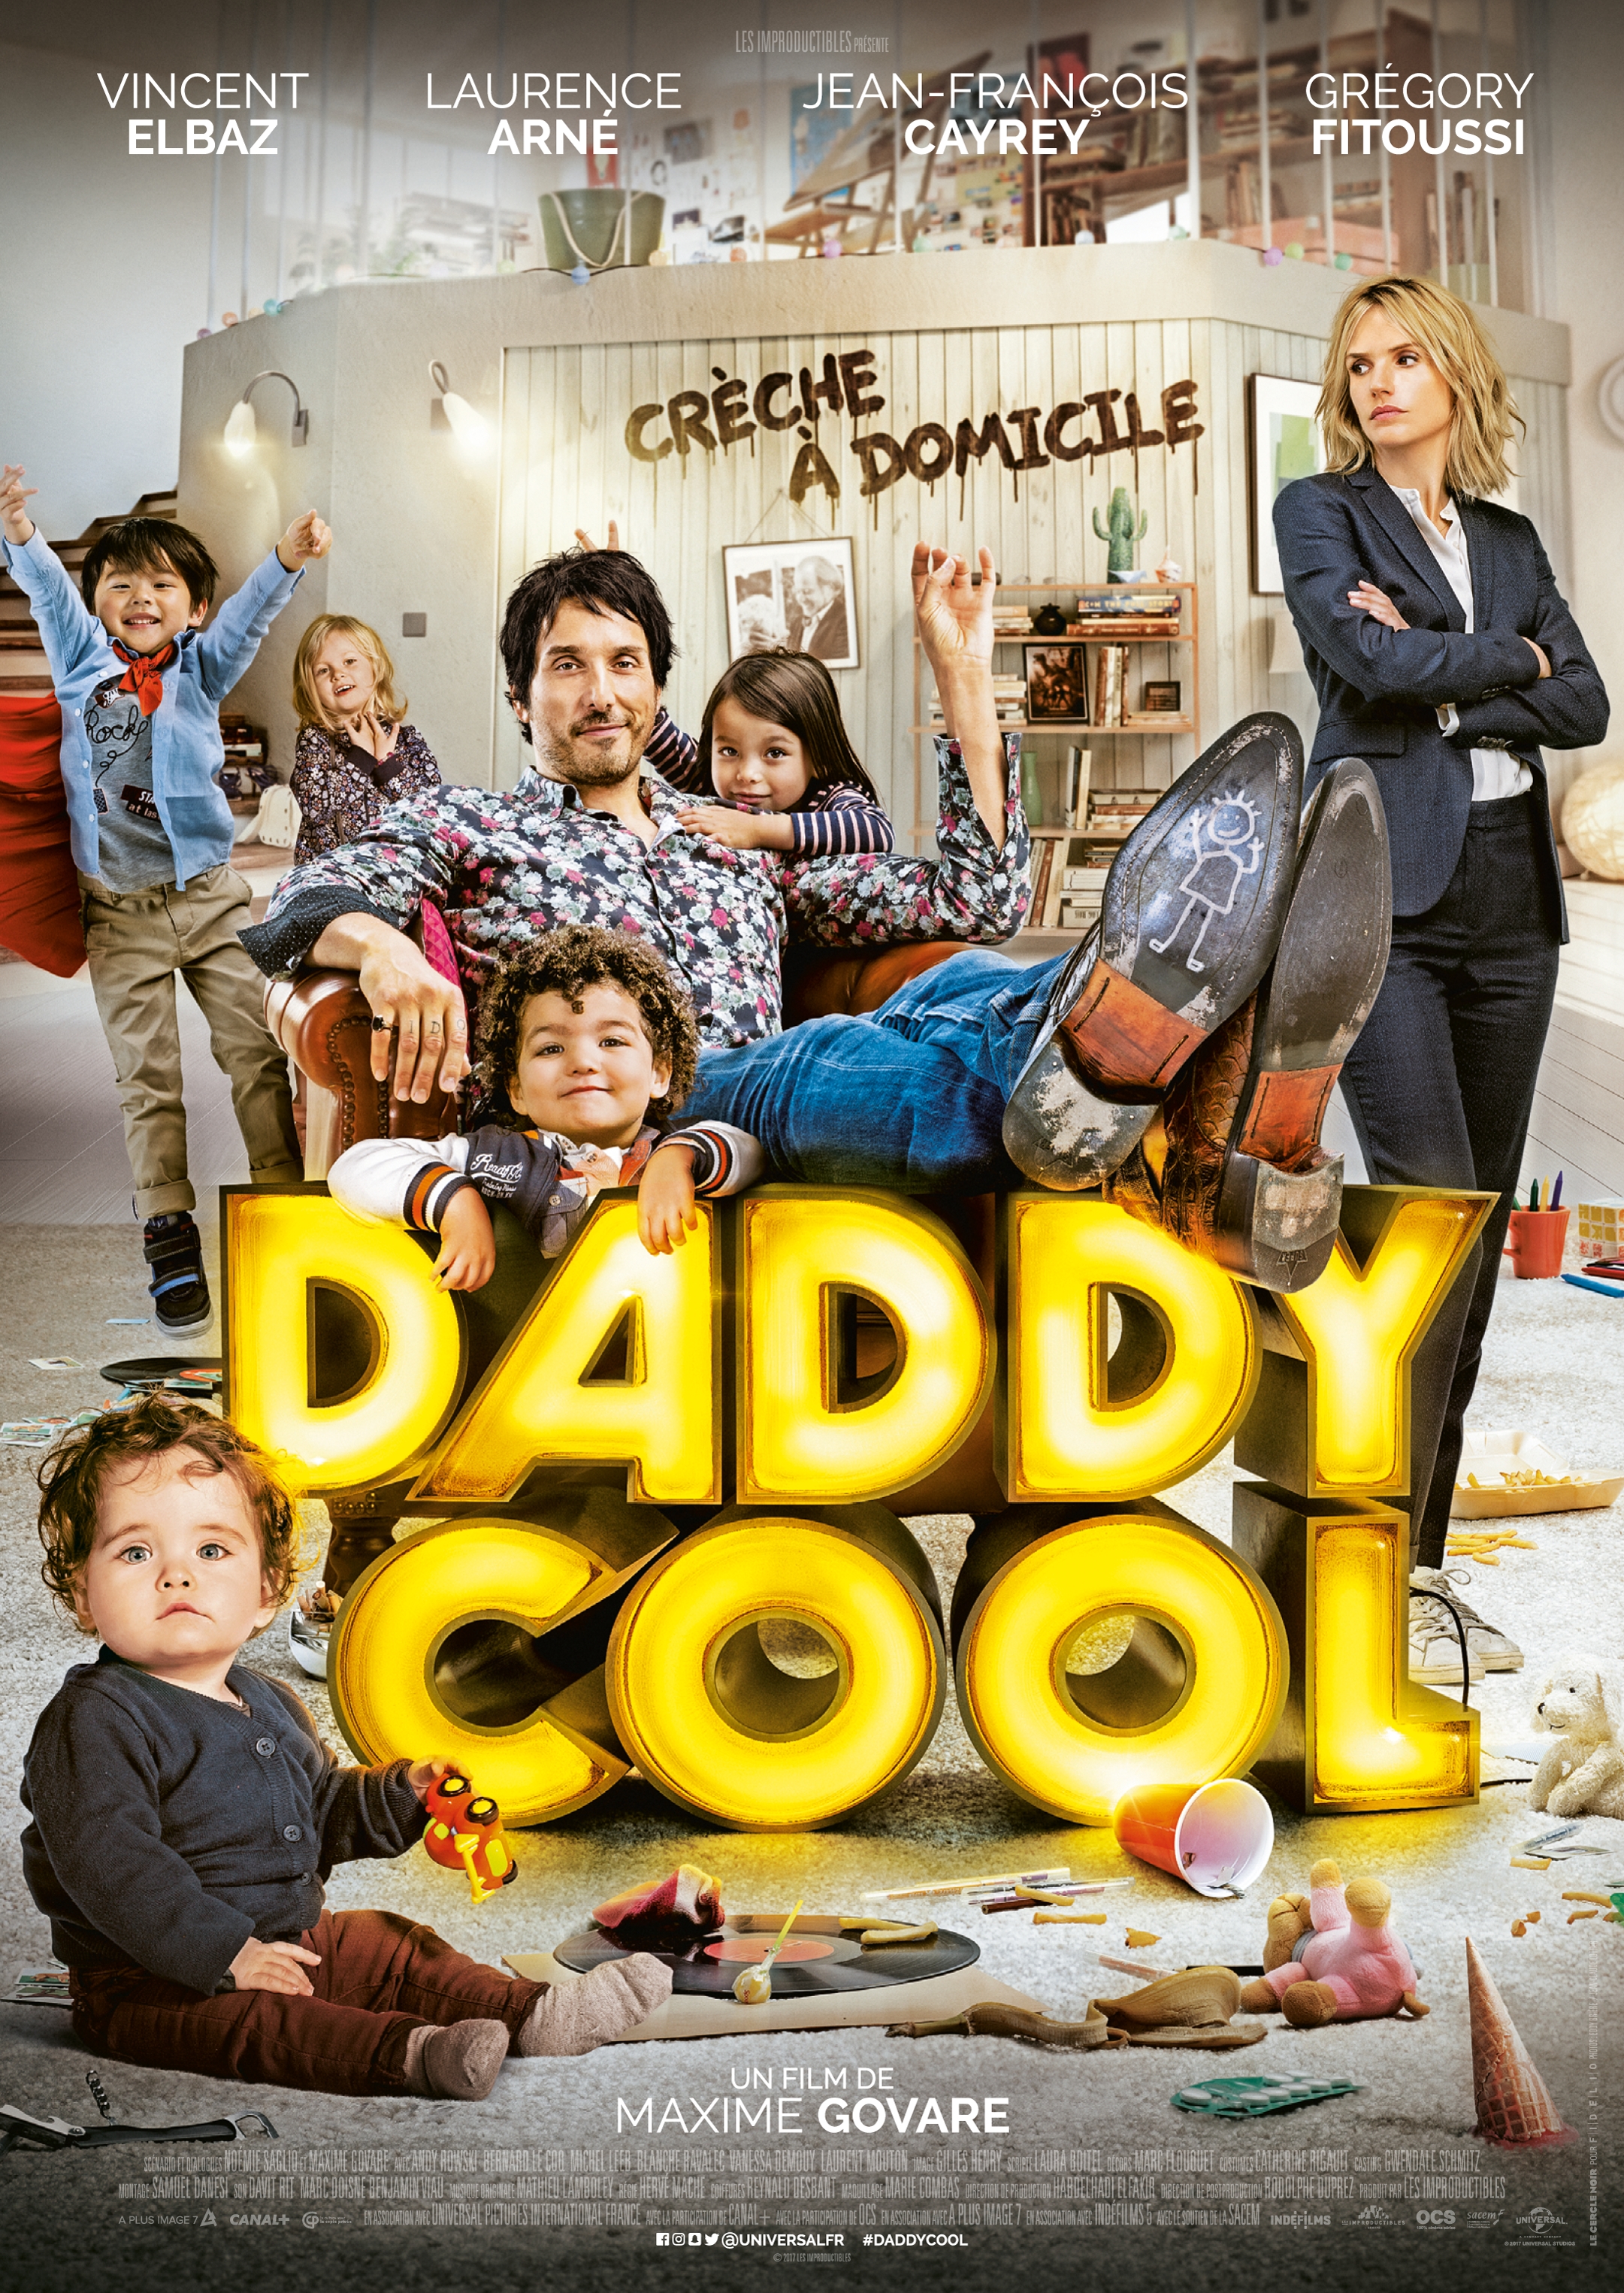 Stiahni si Filmy CZ/SK dabing Daddy Cool (2017)(CZ) = CSFD 64%